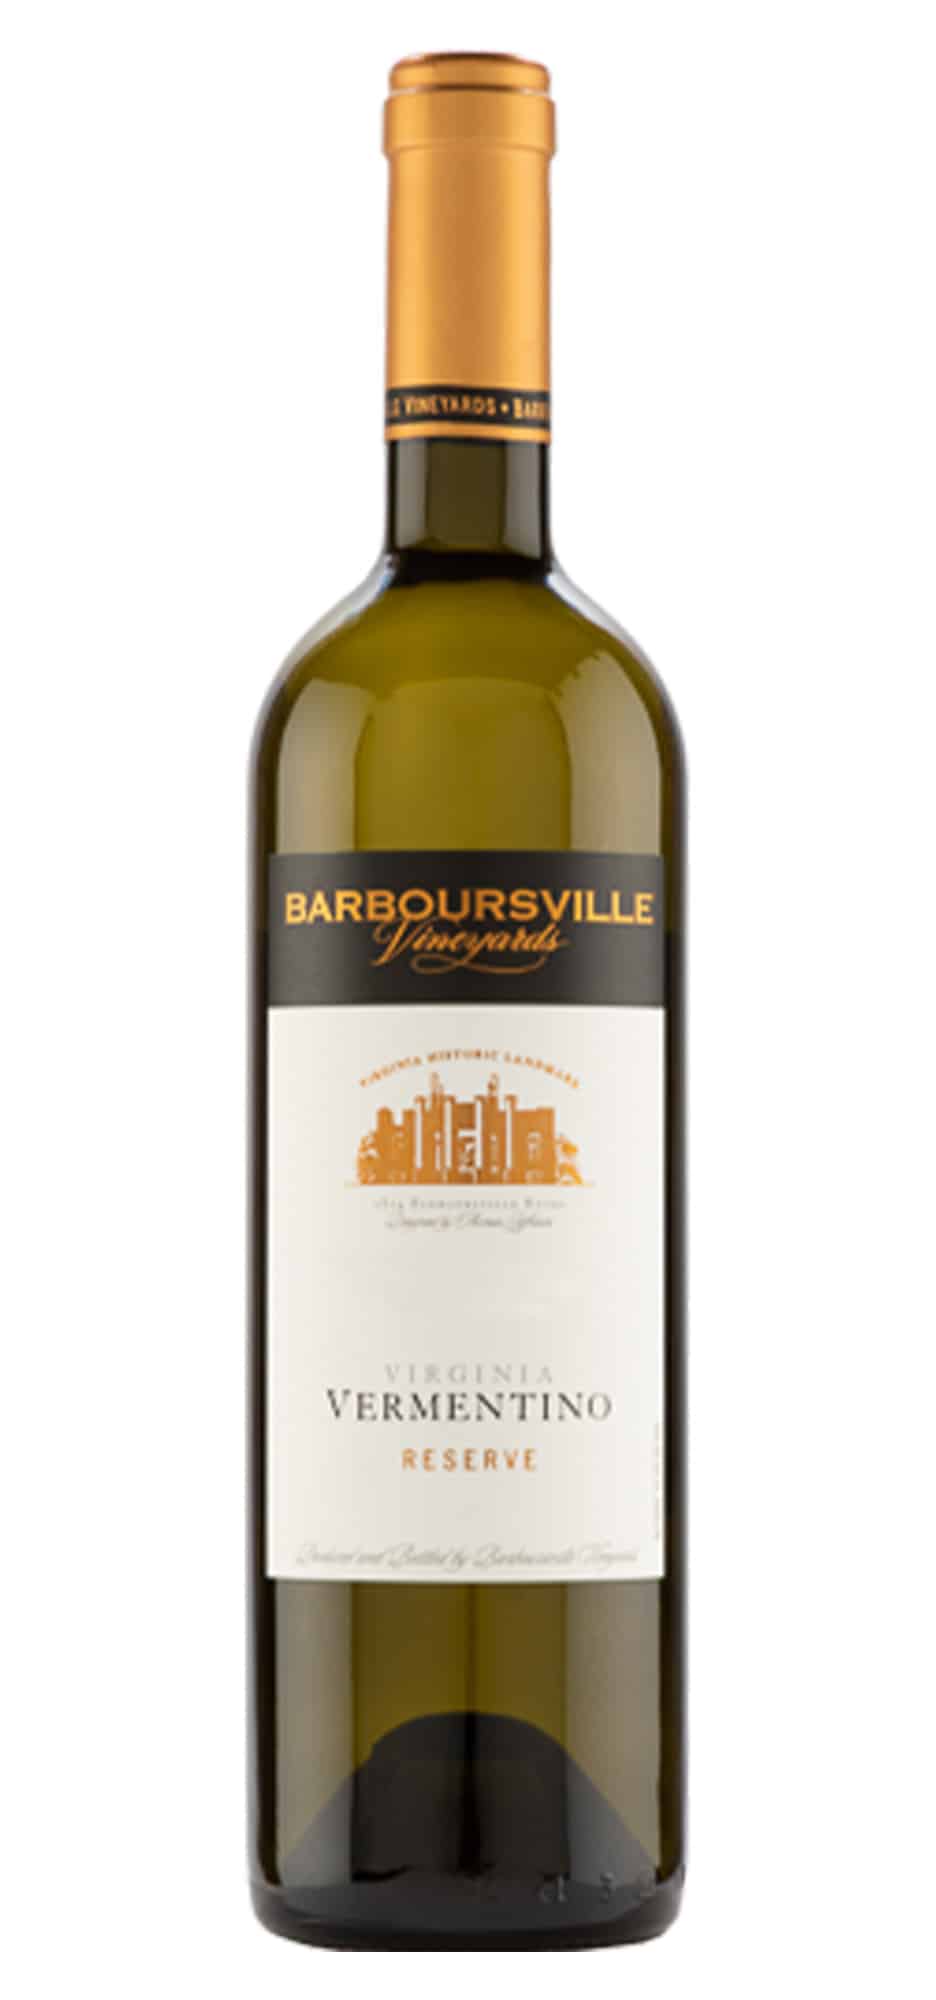 Barboursville Vineyards award-winning wine, Vermentino Reserve bottle